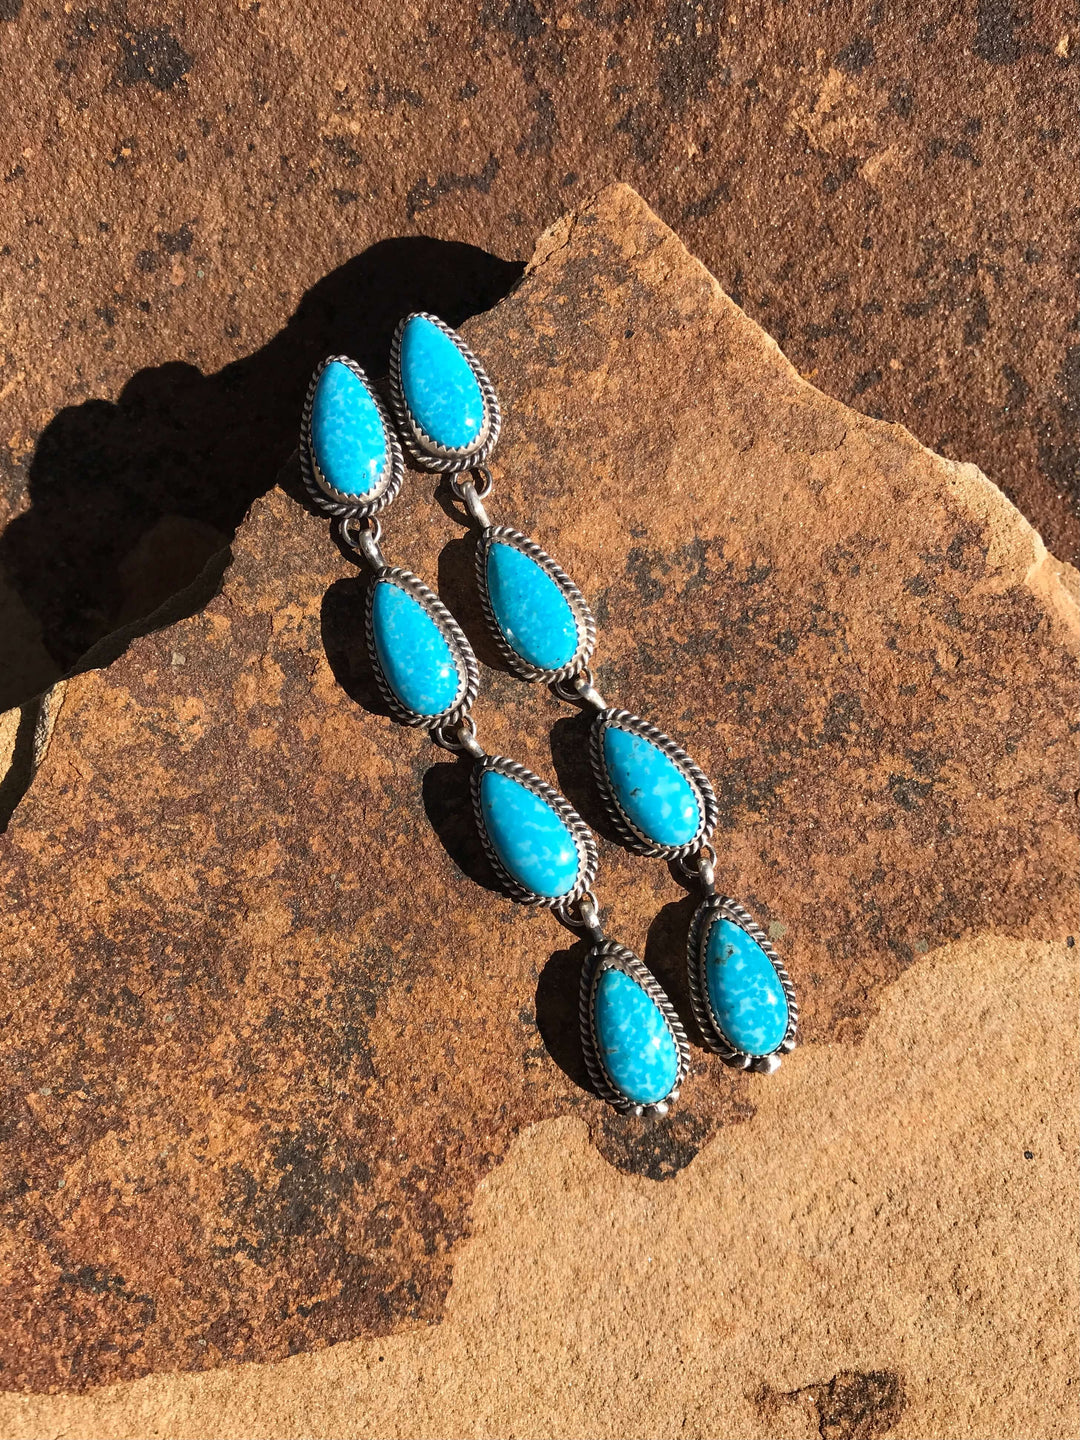 The 4 Stone Drop Earrings, 10-Earrings-Calli Co., Turquoise and Silver Jewelry, Native American Handmade, Zuni Tribe, Navajo Tribe, Brock Texas